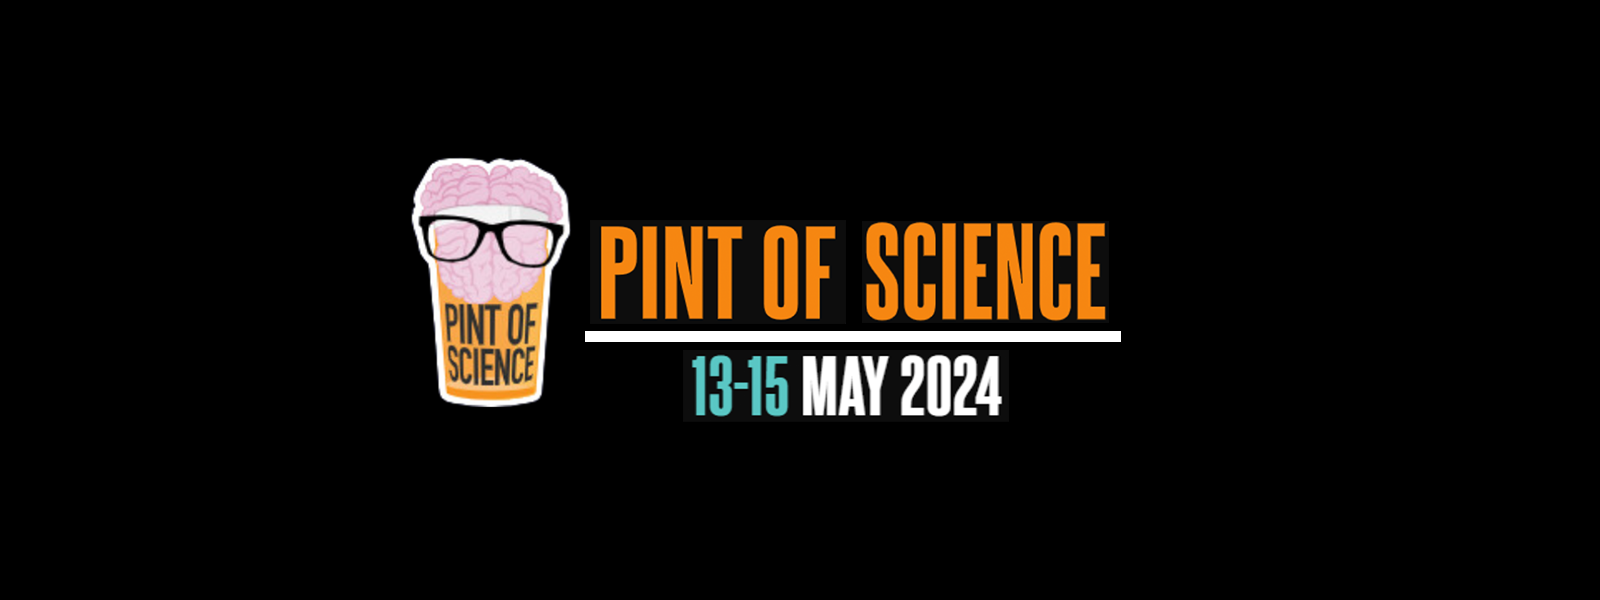 Pint of Science logo